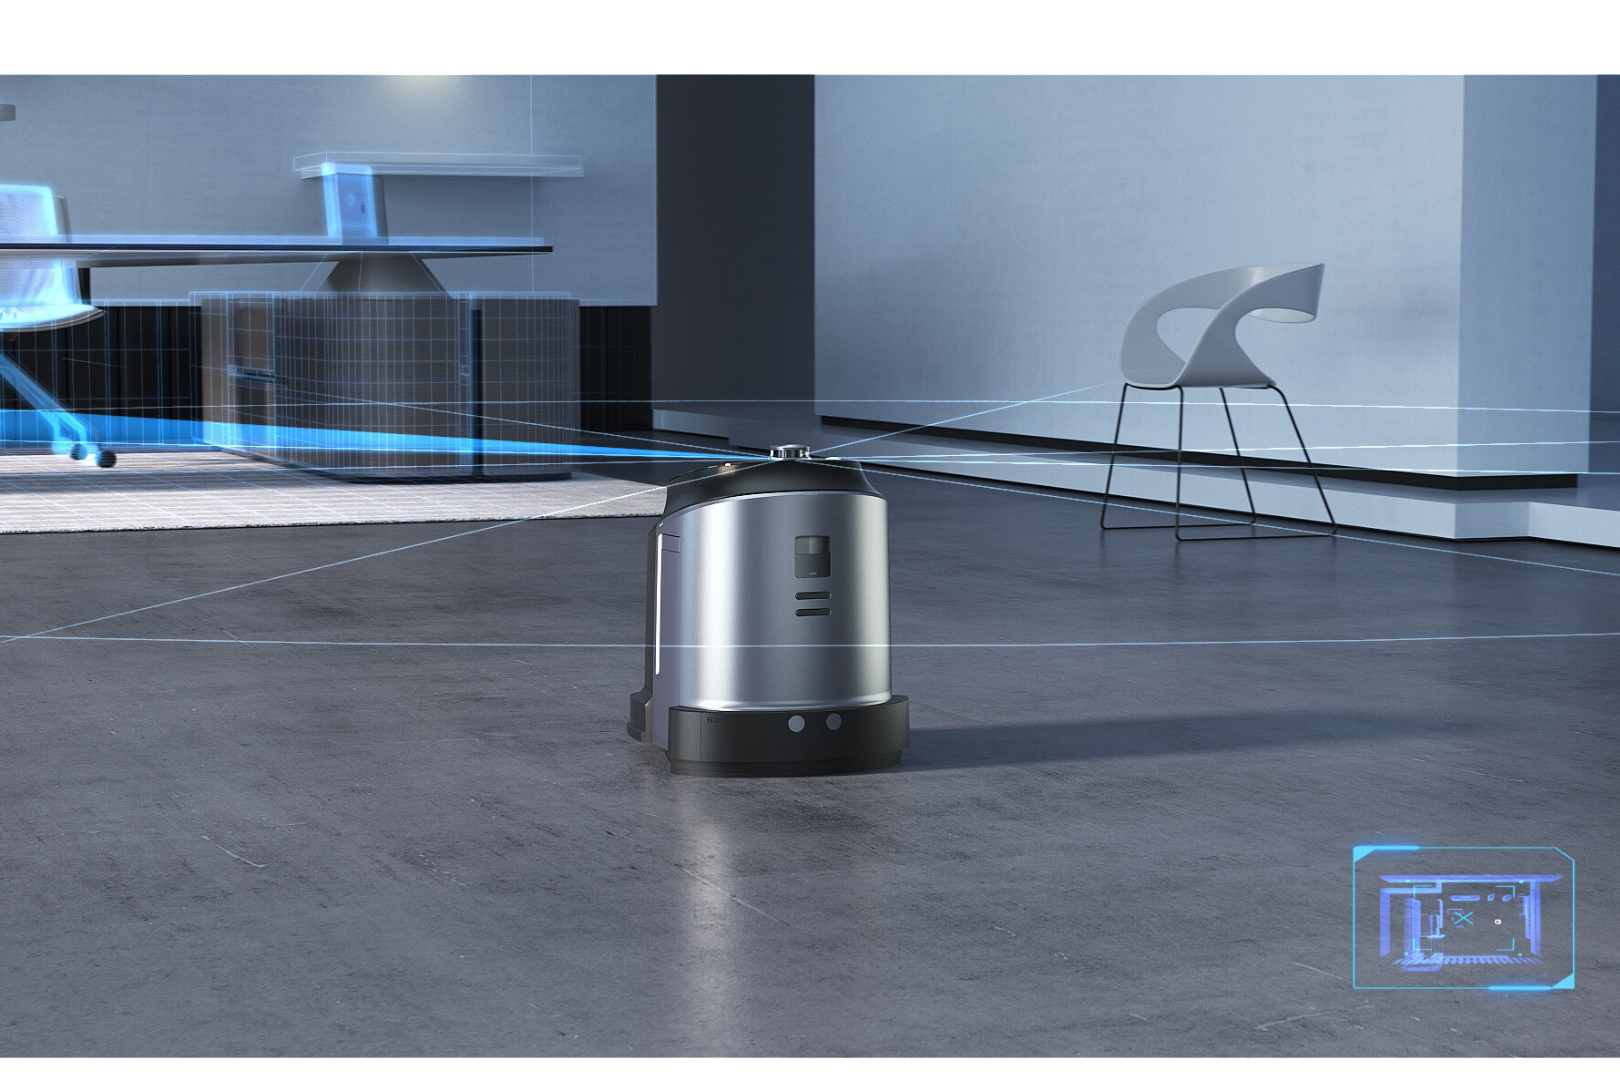 ROSI X All-in-one Robotic floor cleaner sensor technology